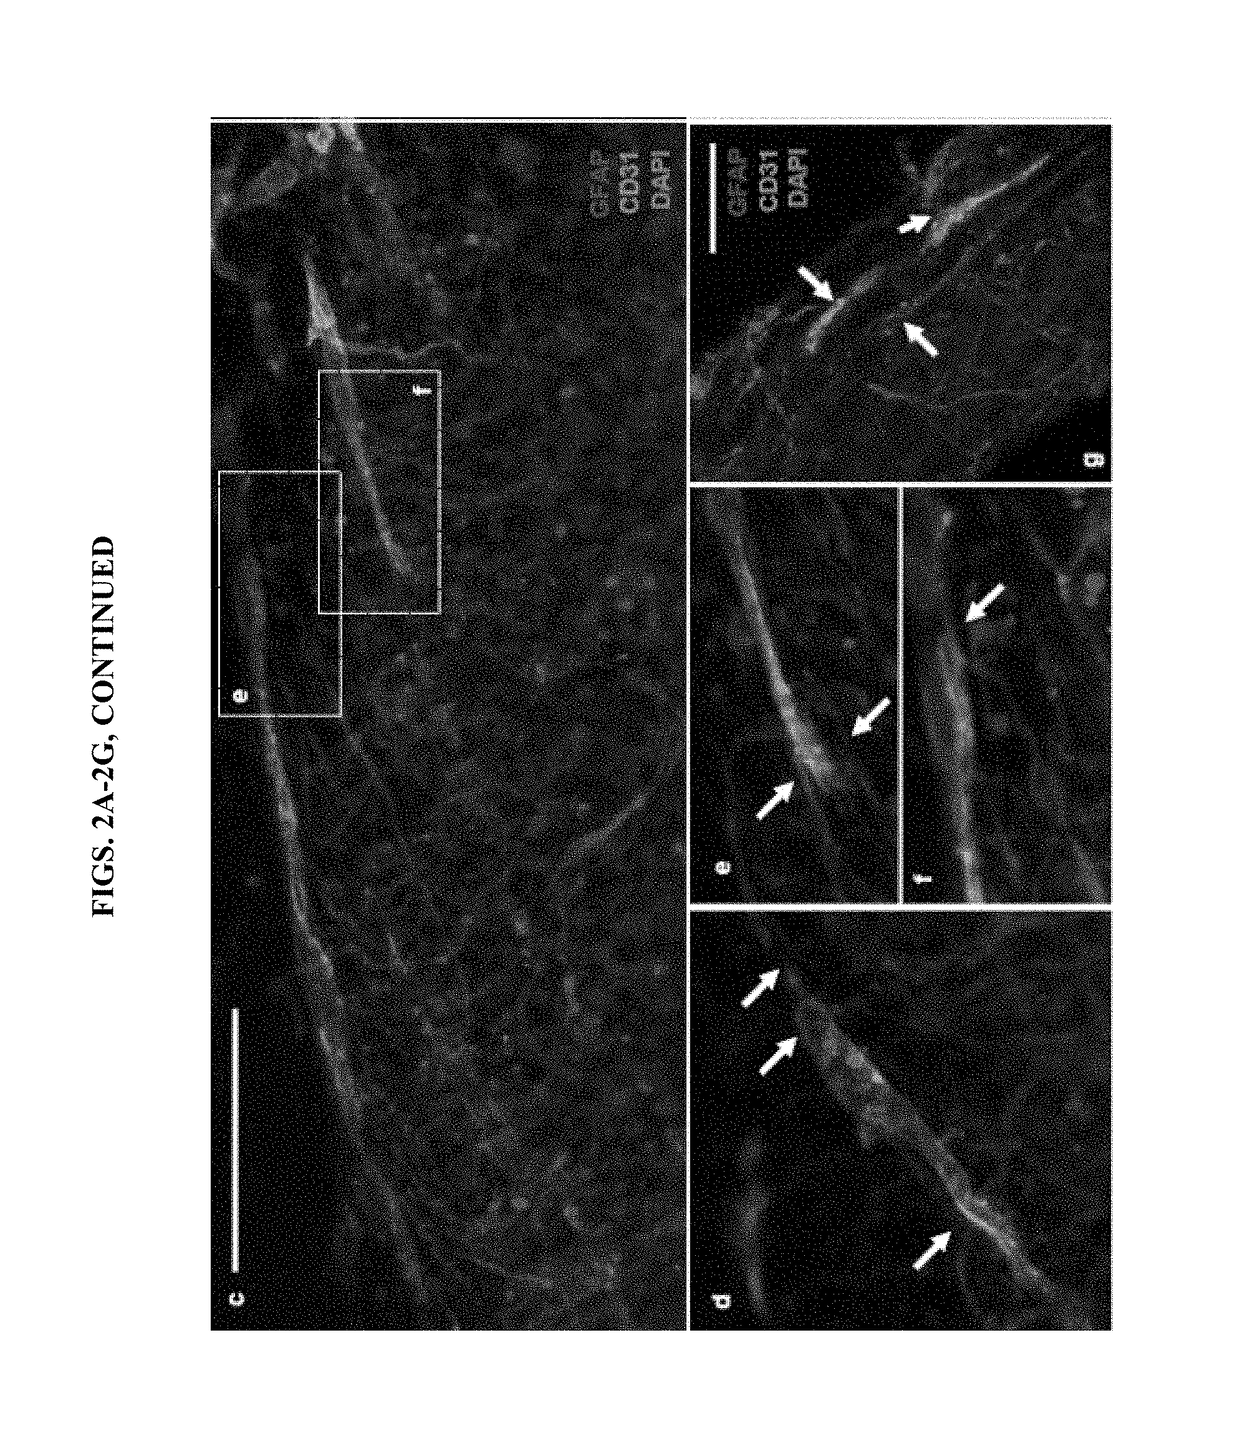 Derivation of human microglia from pluripotent stem cells